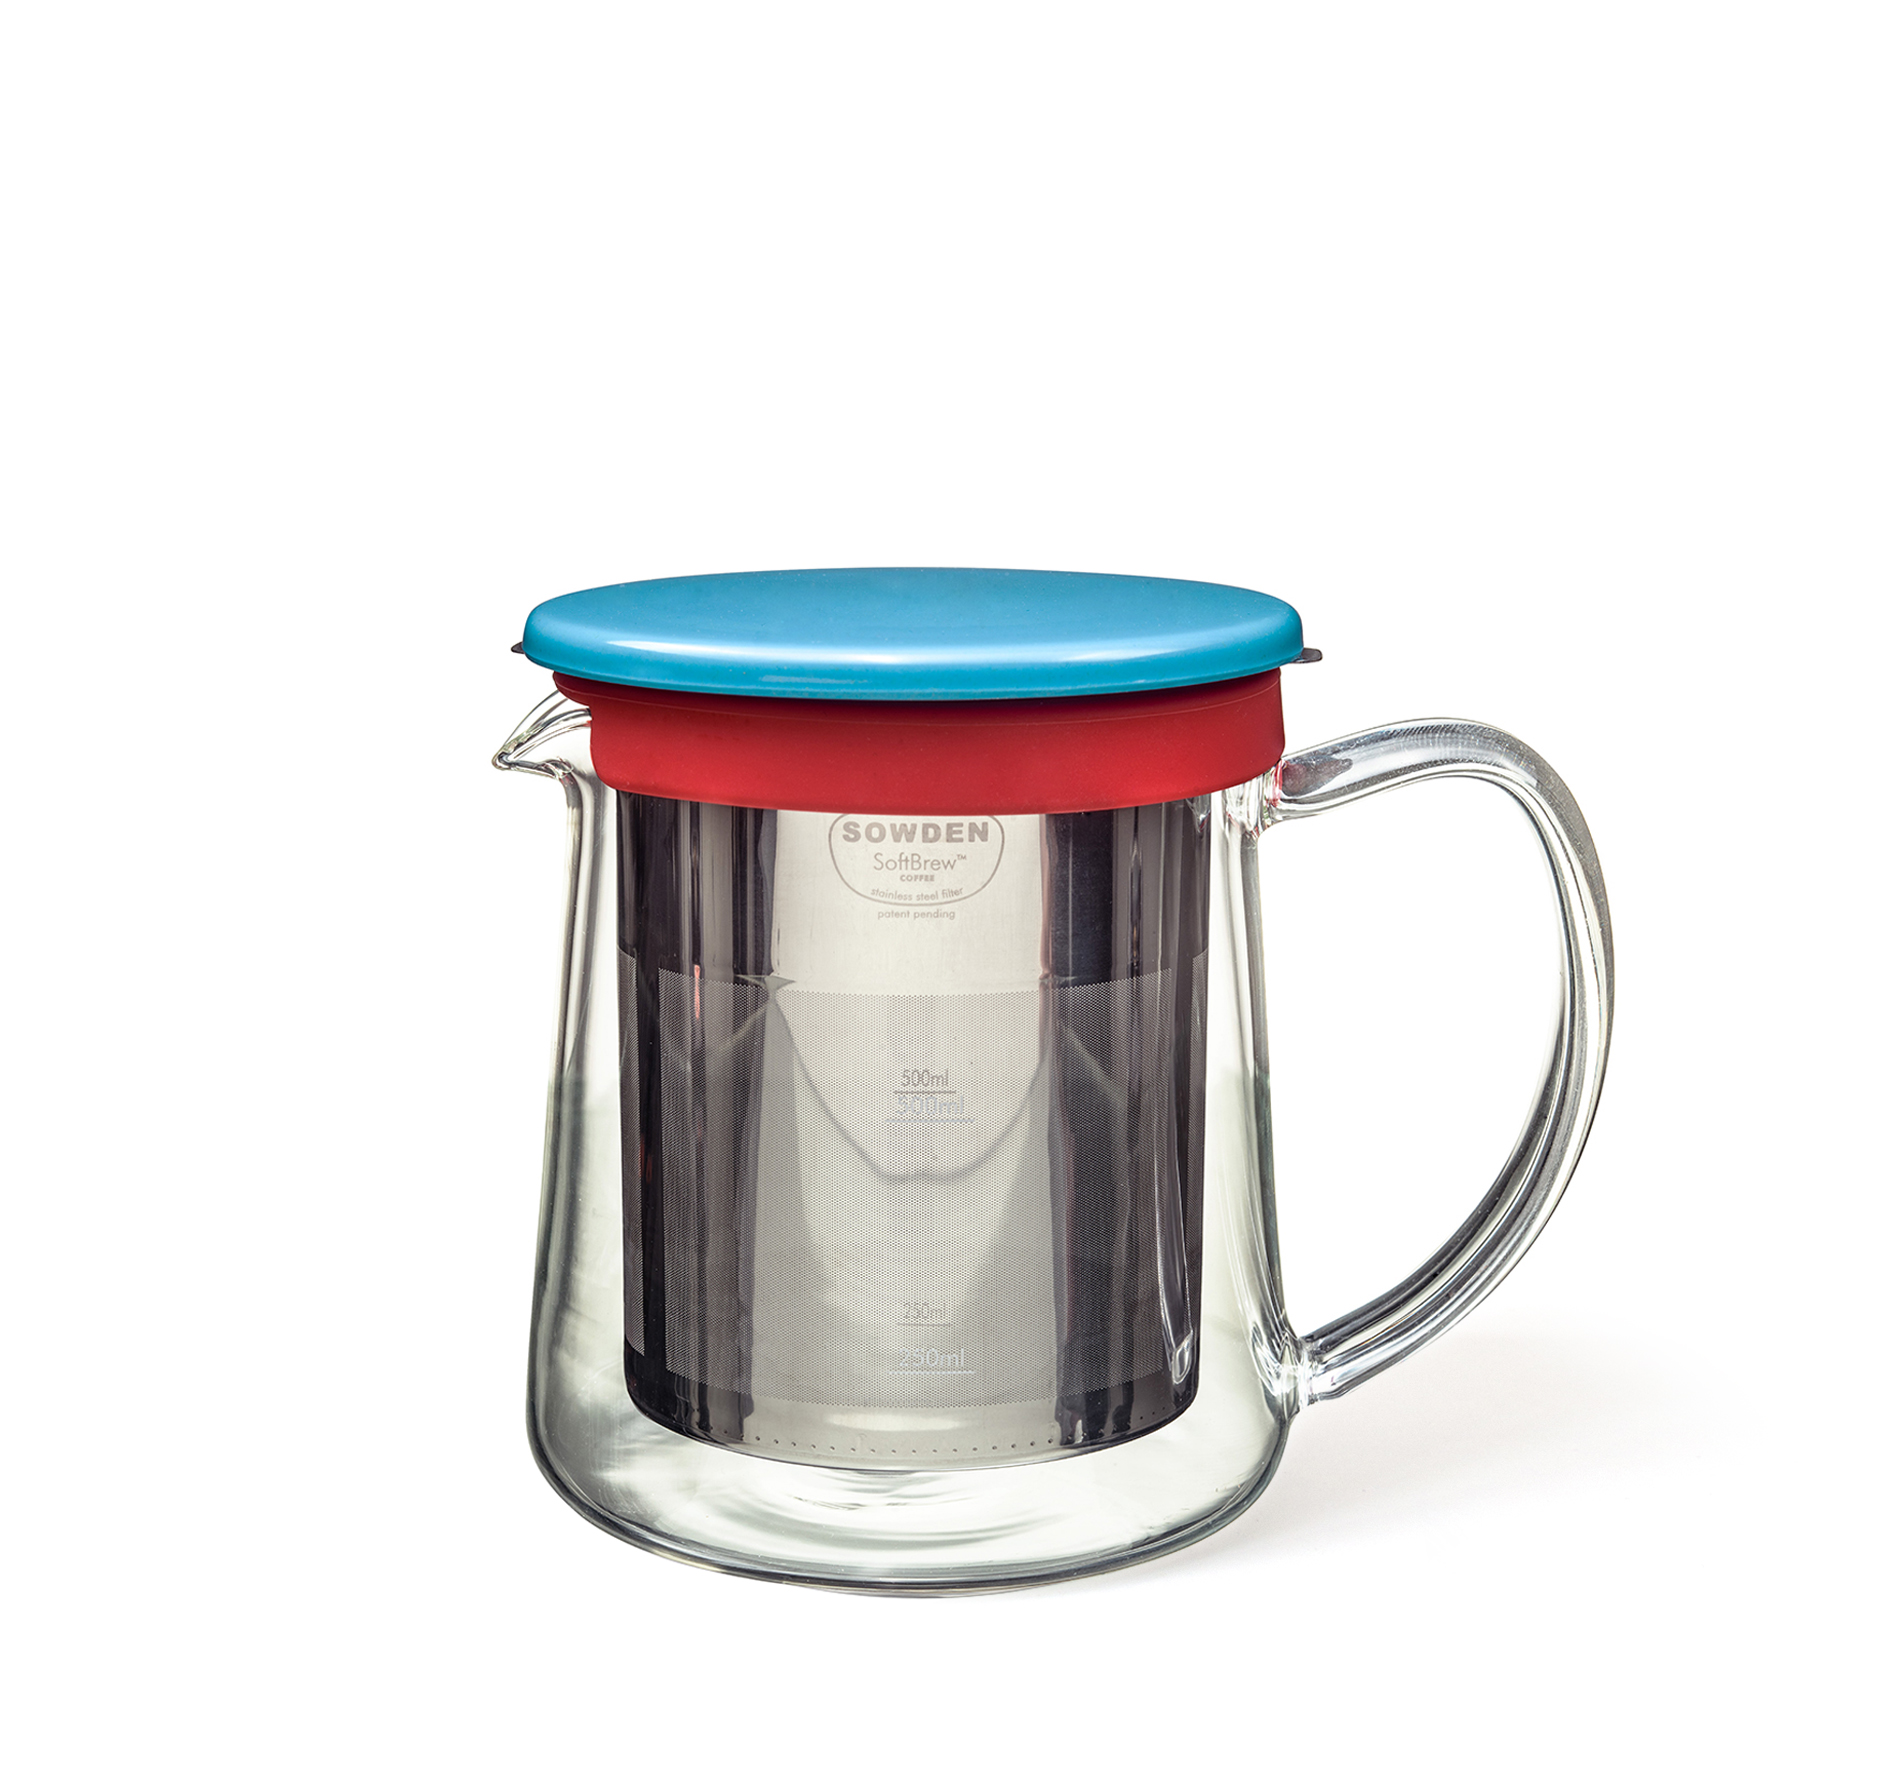 James 8 Cup MAX 1L-33.8 oz Sowden SoftBrew Coffee-Model Black-Wine red Lid 